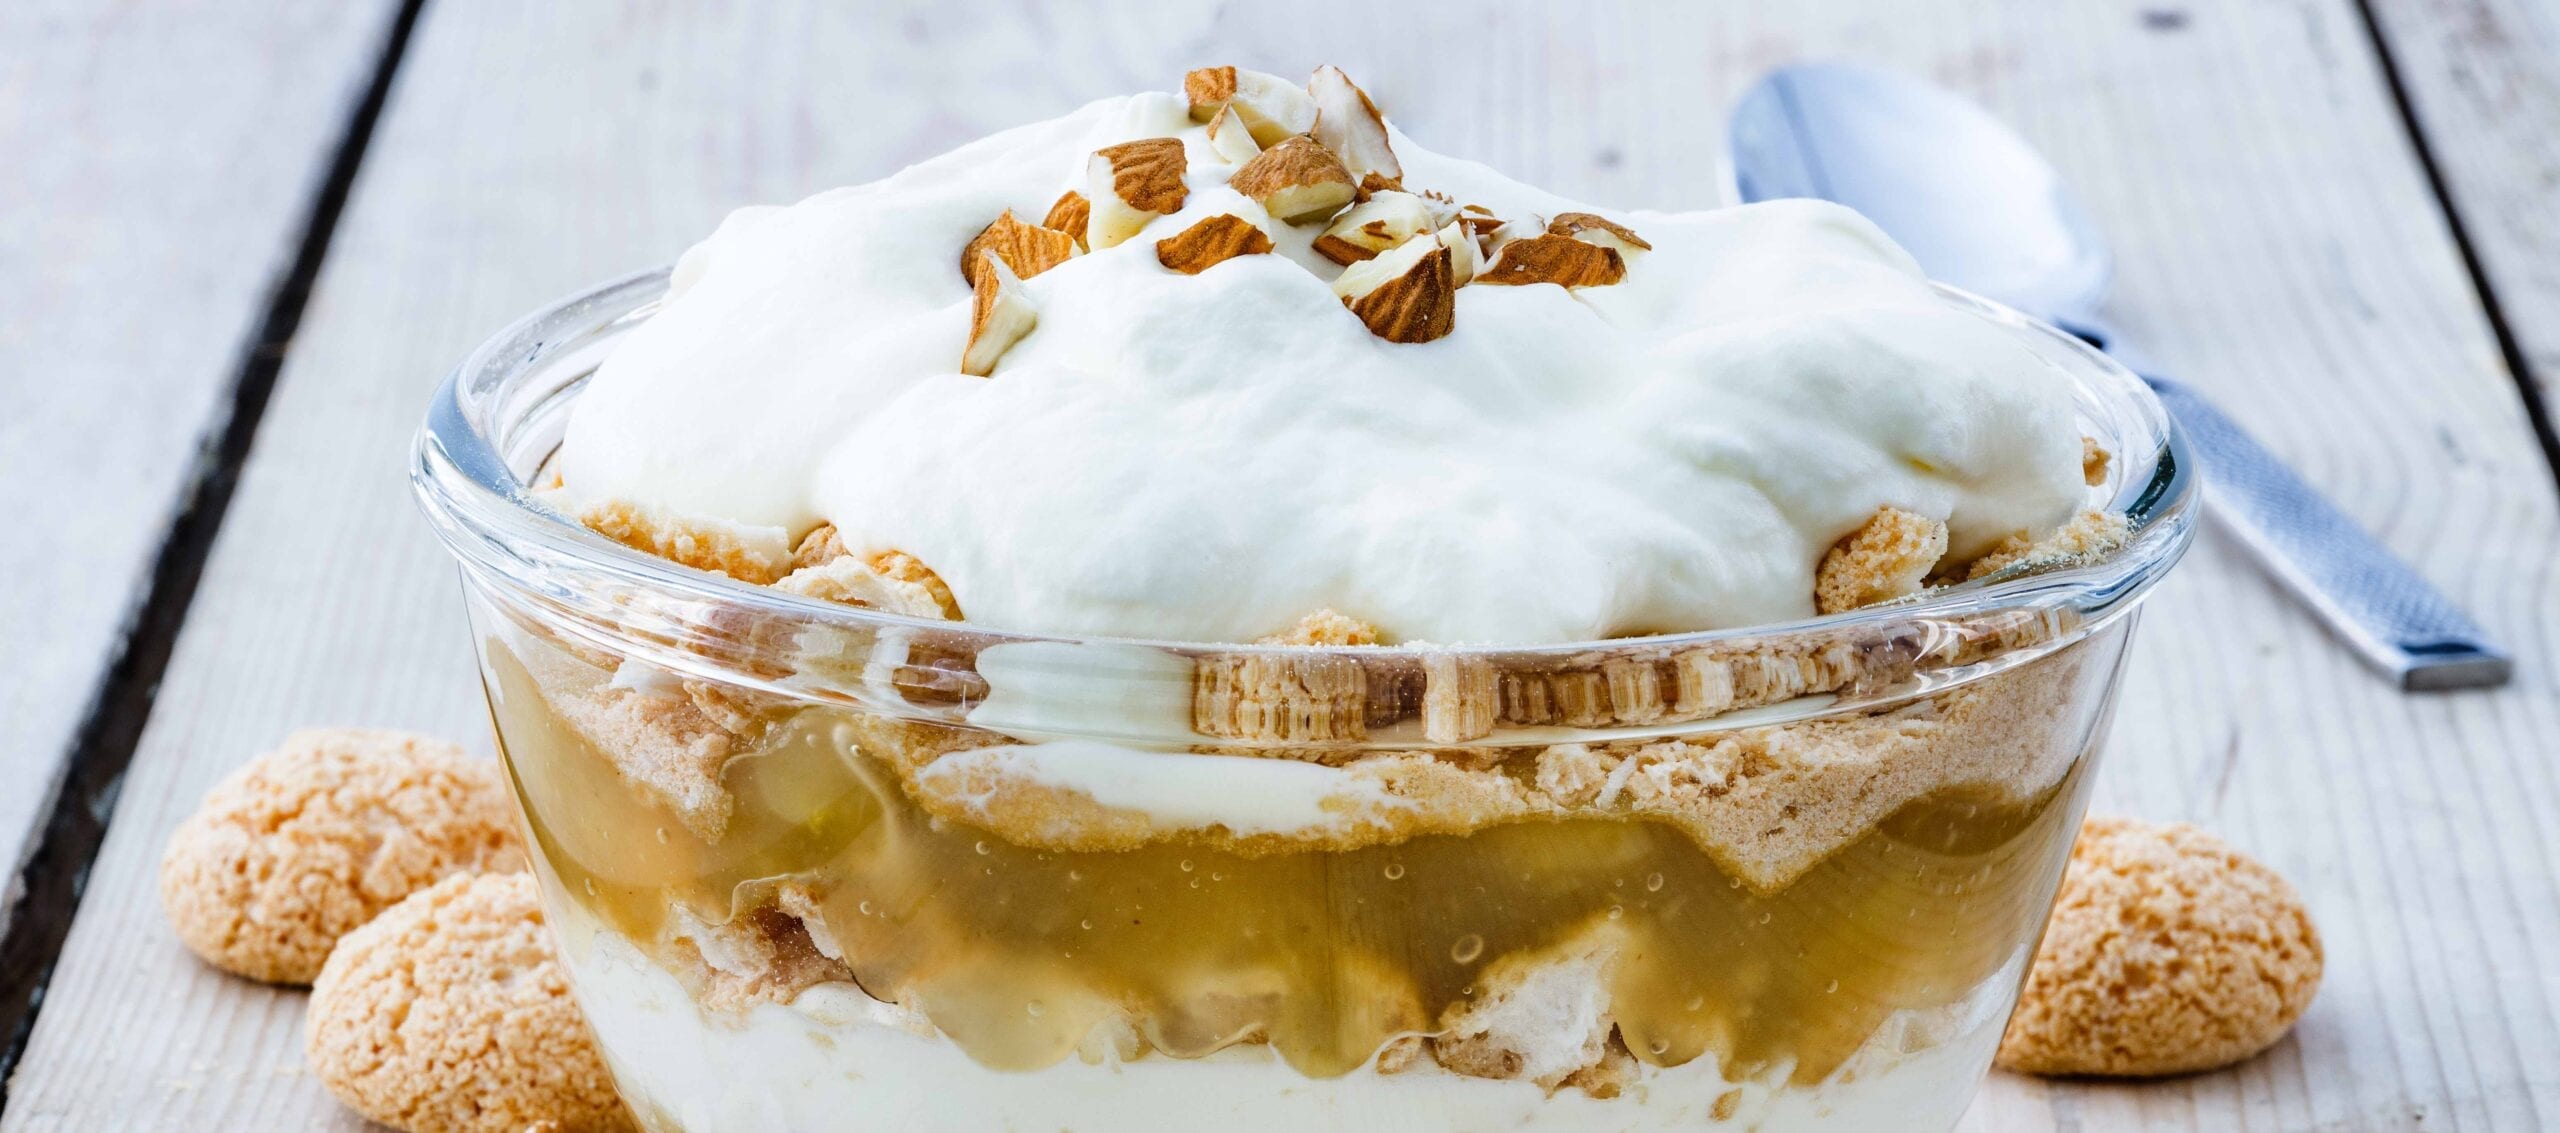 Gammeldags æblekage med makroner, flødeskum og æblestykker kan laves på 10 minutter